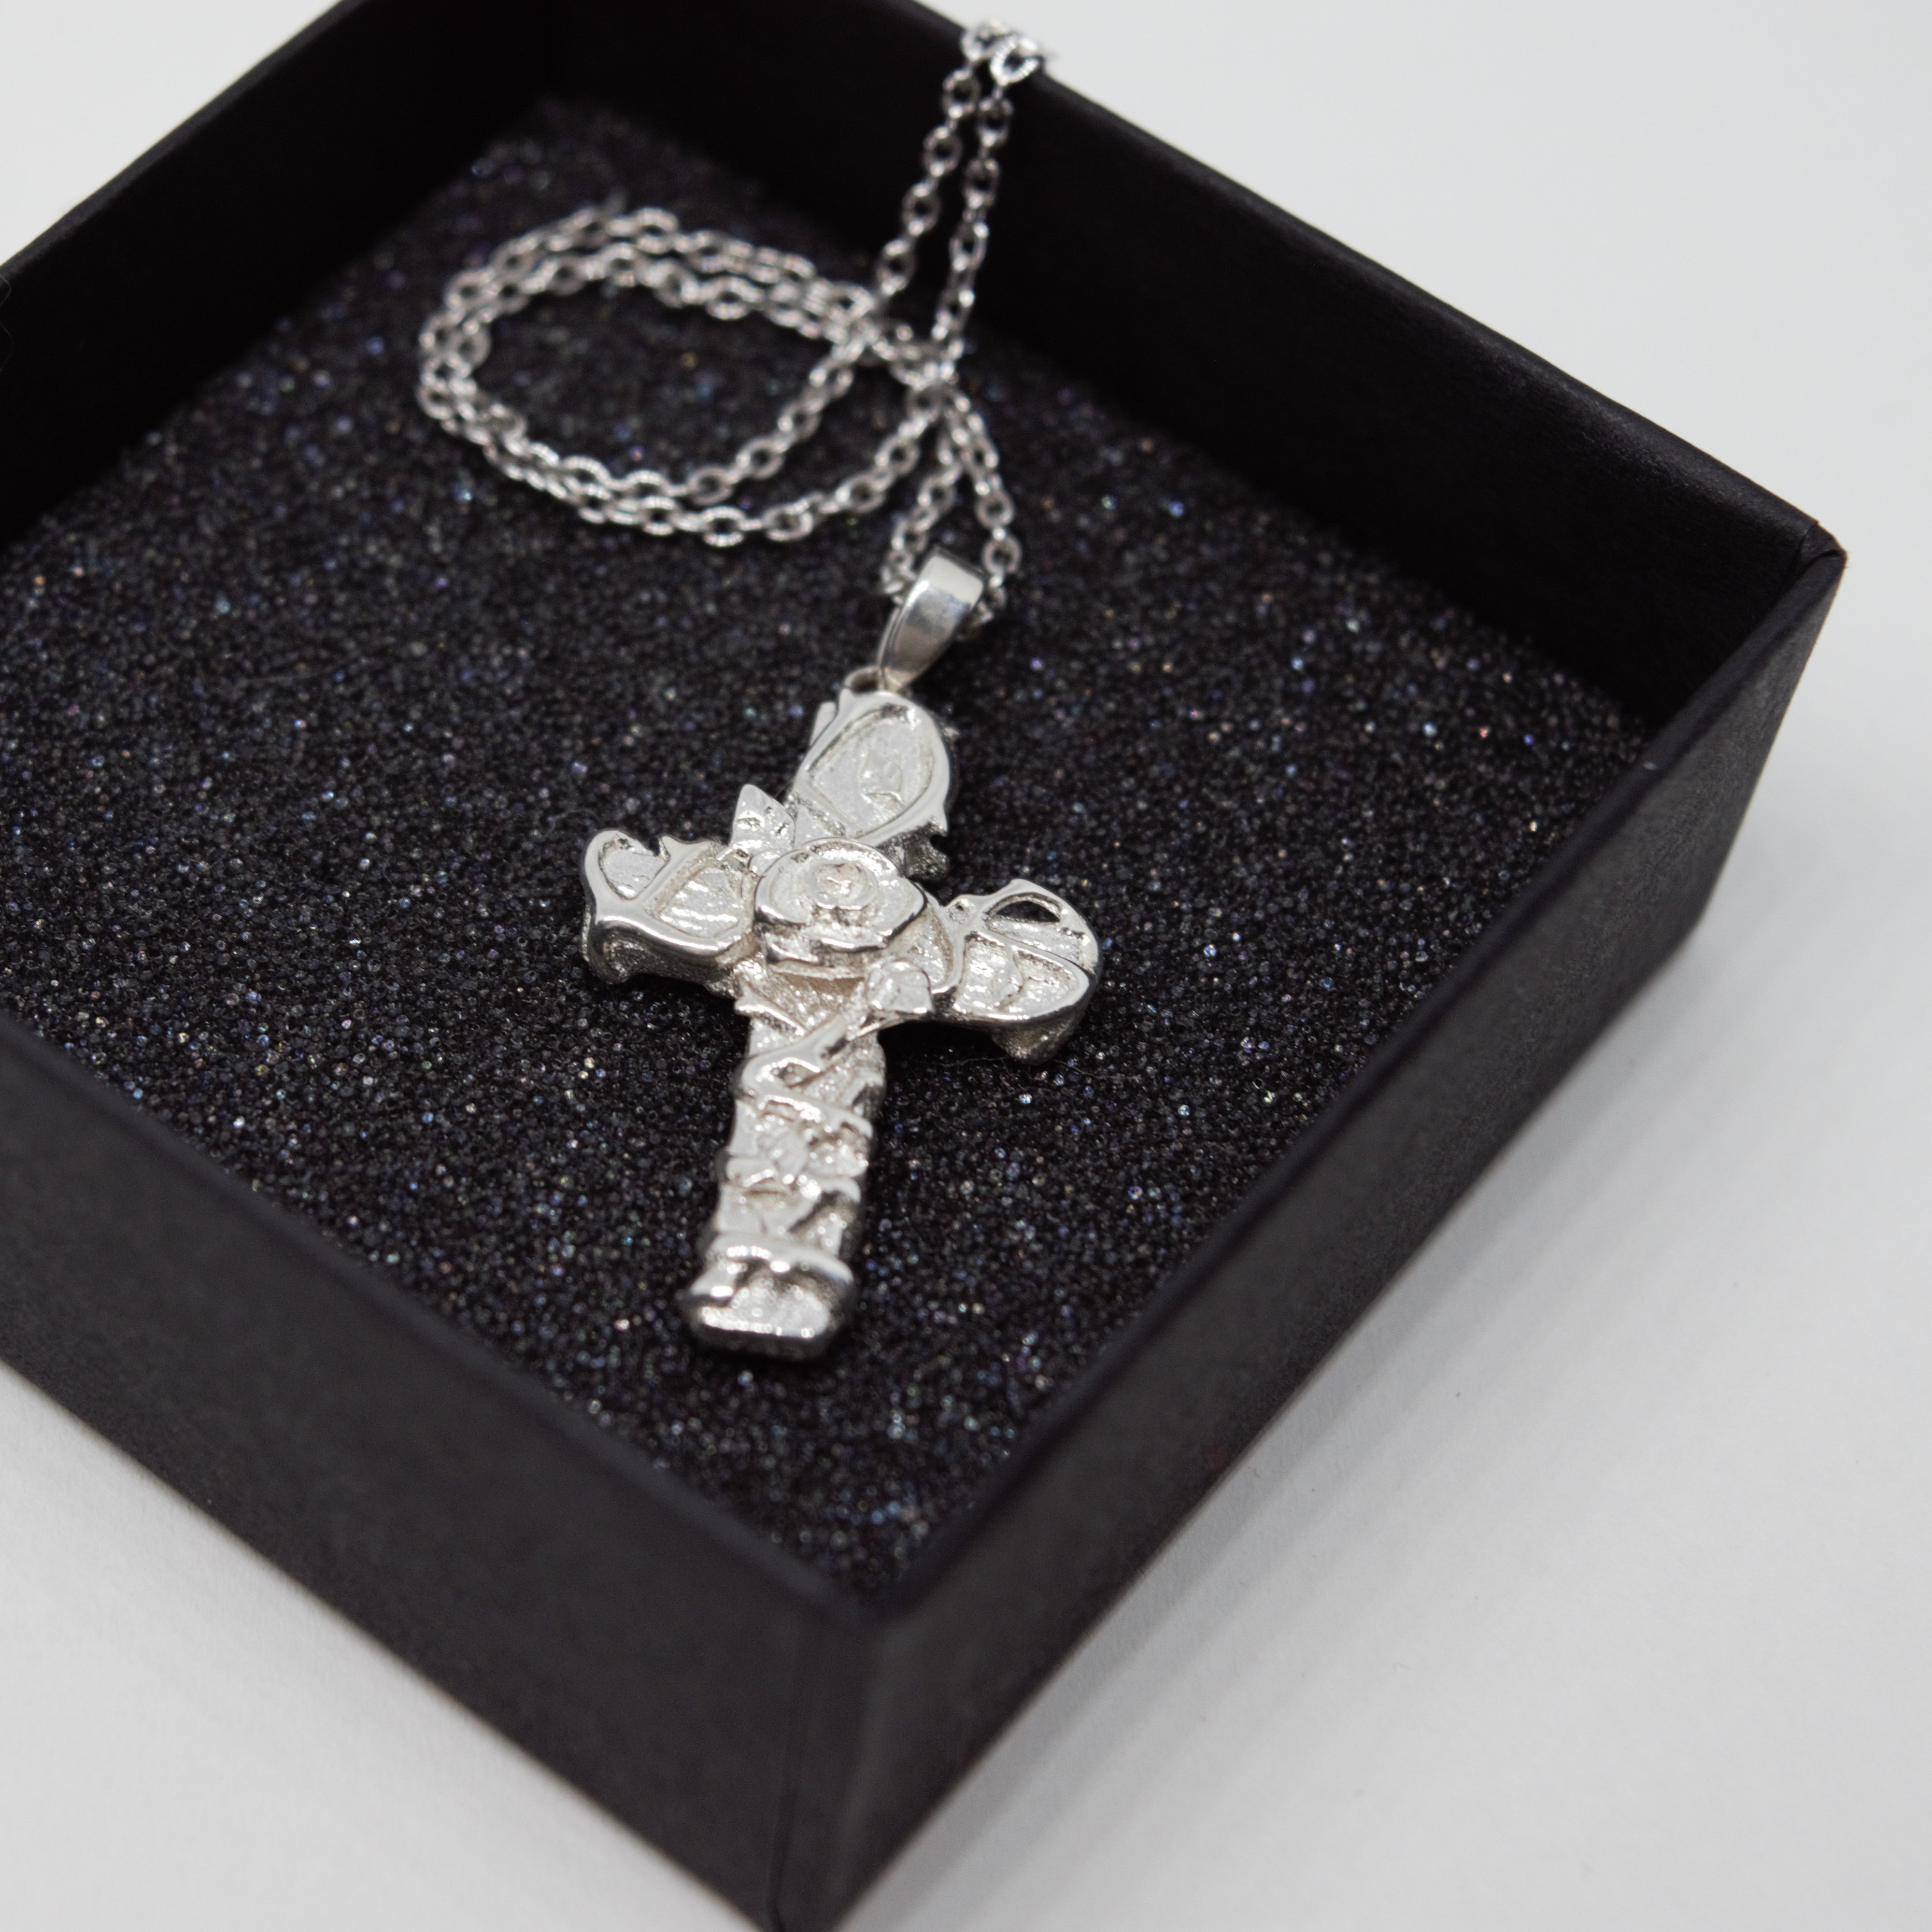 Bam Margera Thorned Cross Necklace - Bam Margera Merchandise